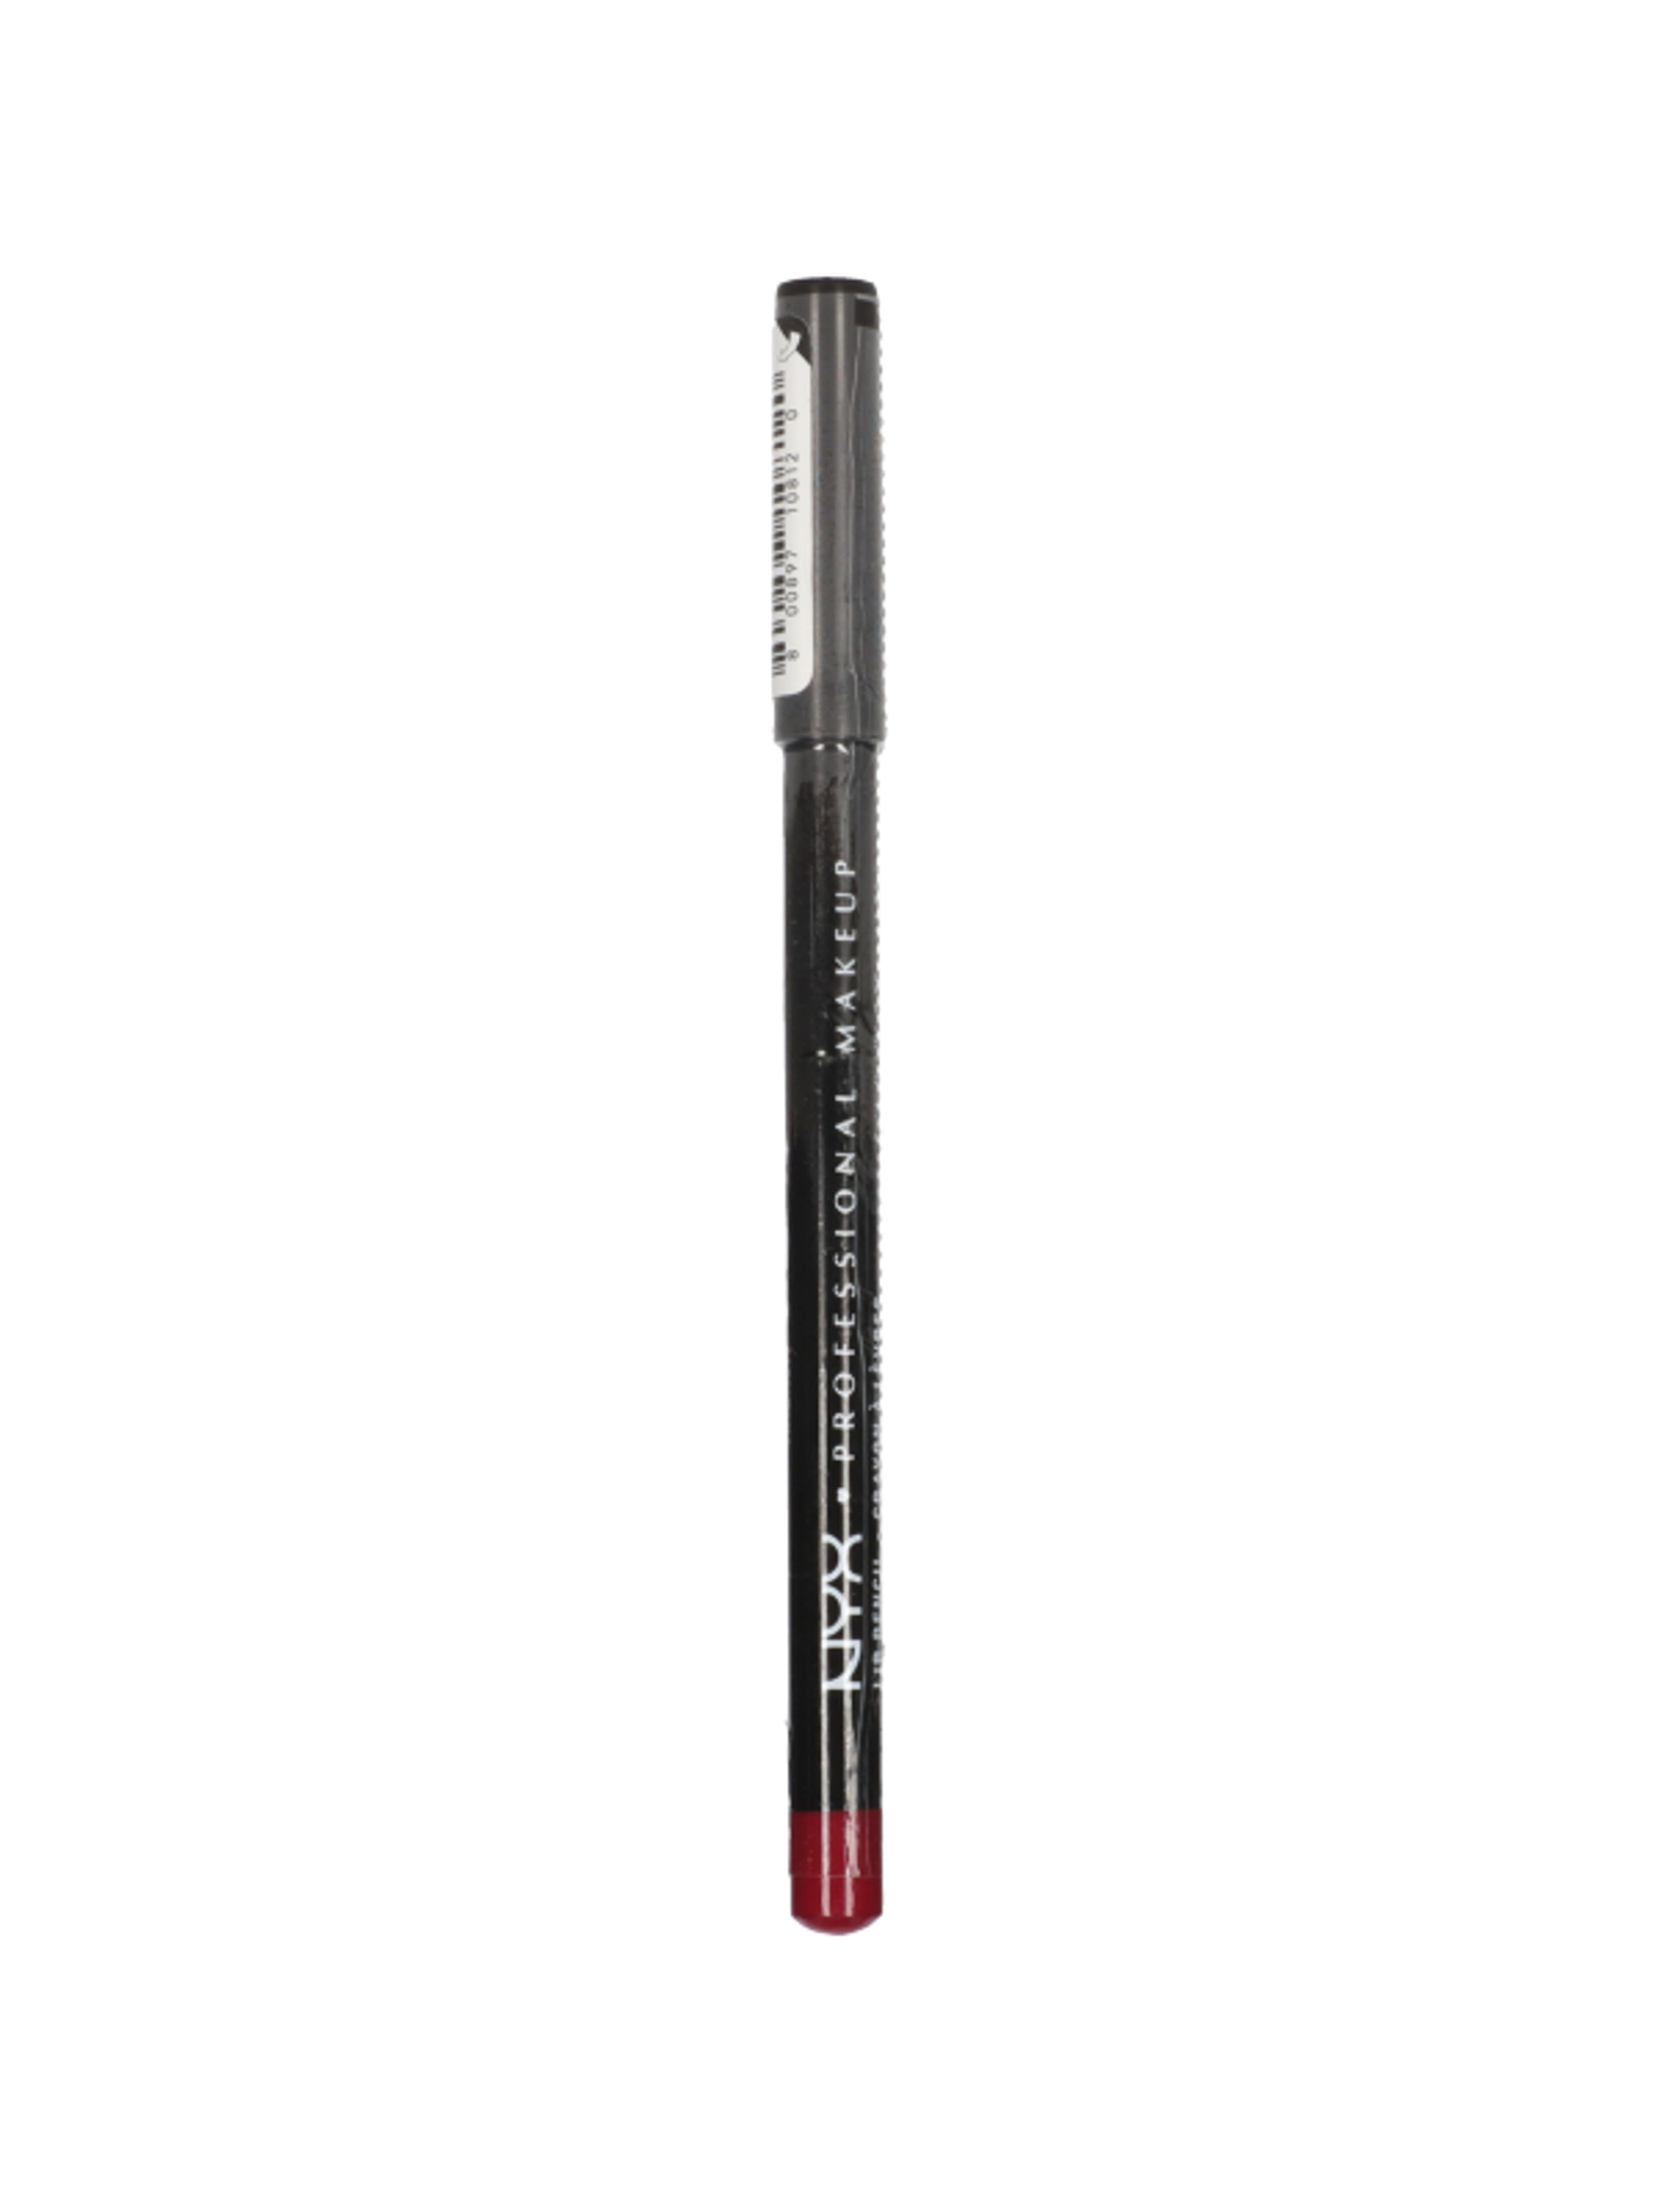 NYX Professional Makeup Slim Lip Pencil ajakkontúr ceruza, Plum - 1 db-7